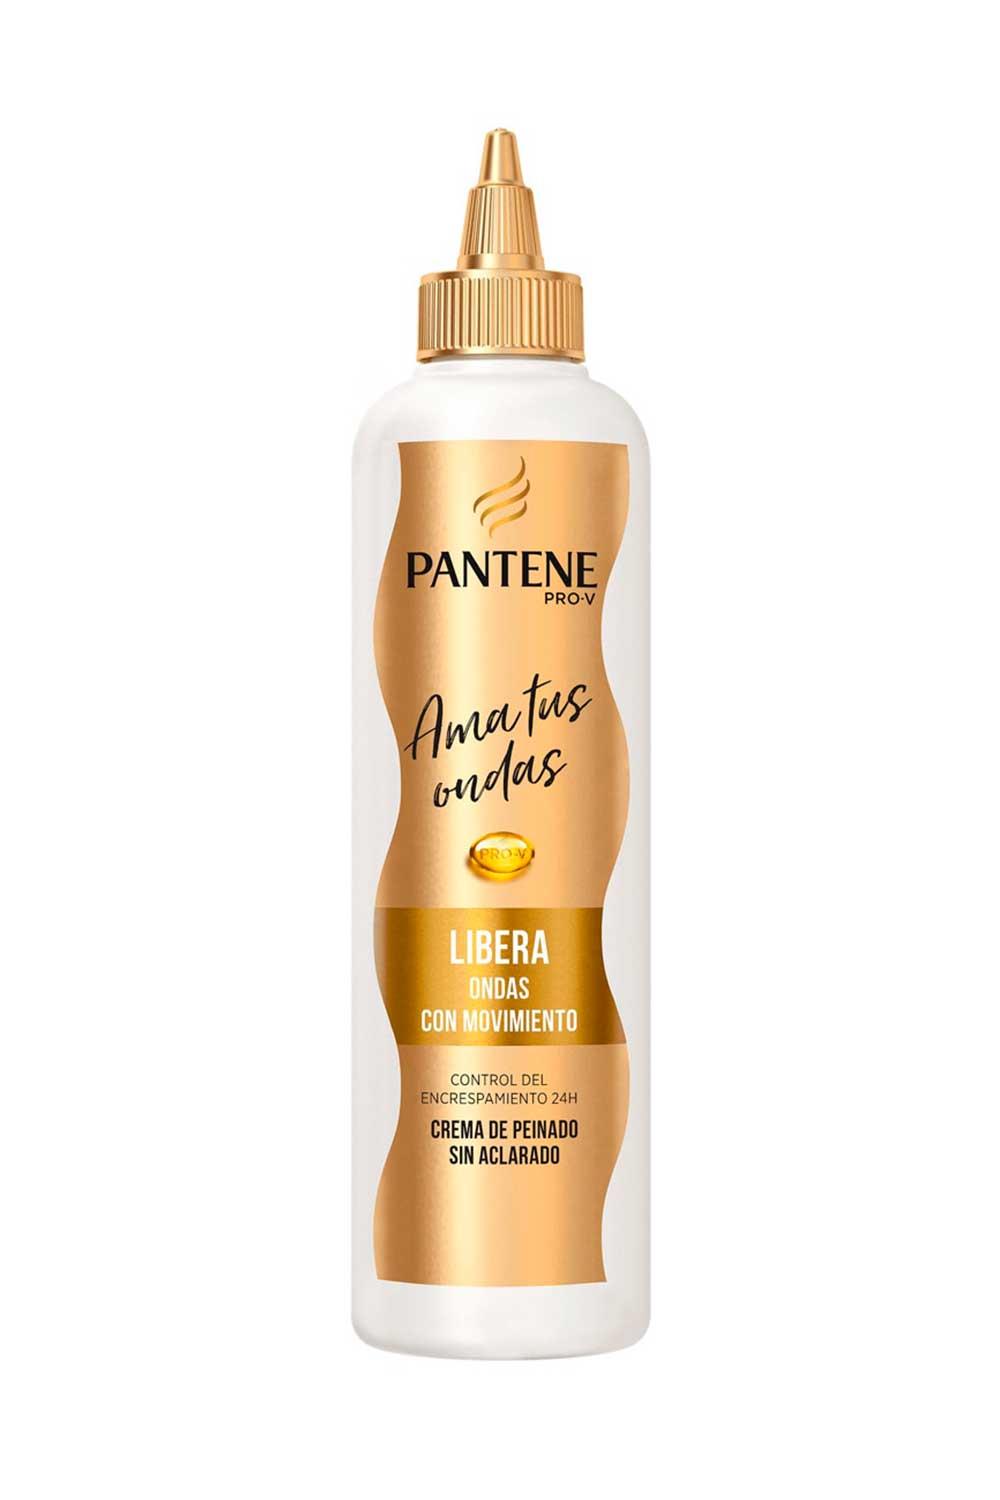 Pantene6. Crema de peinado sin aclarado Libera ondas con movimiento Pro-V Pantene